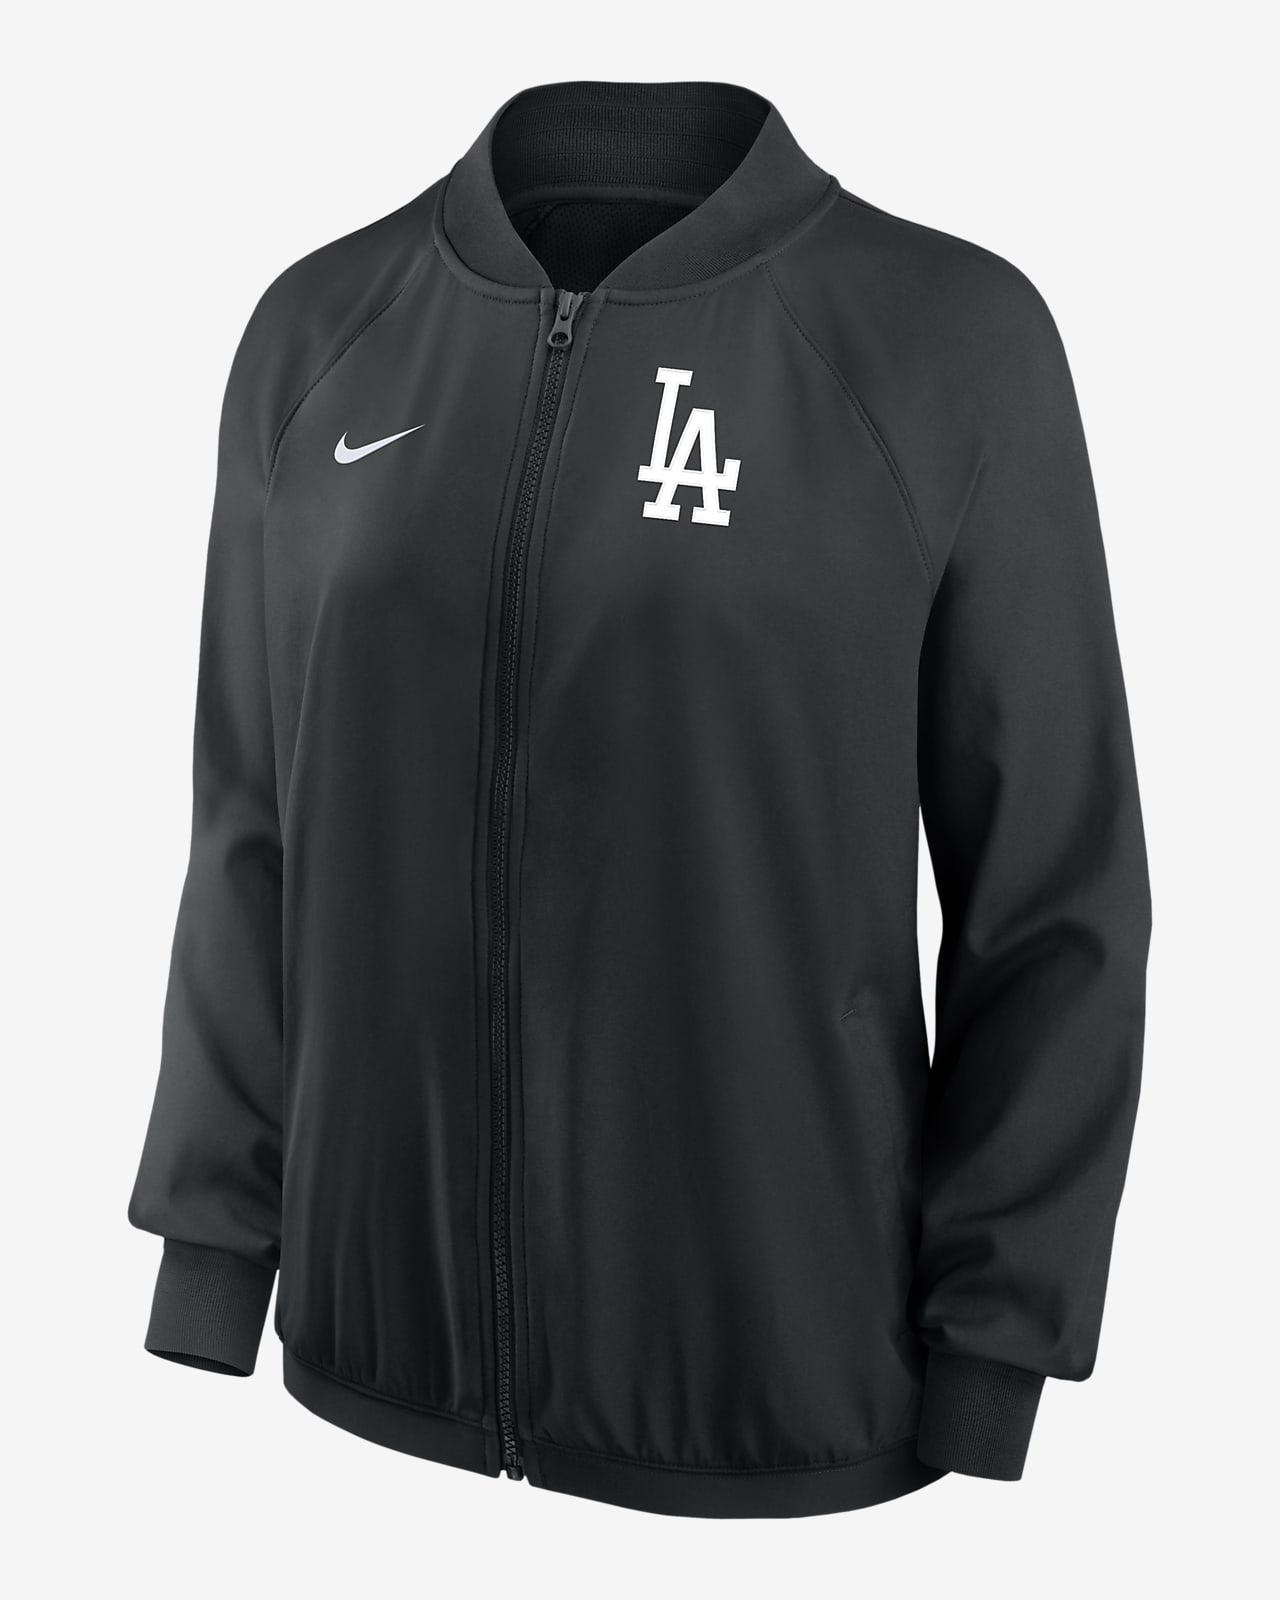 Nike Dri-FIT Team (MLB Los Angeles Dodgers) Women's Full-Zip Jacket.